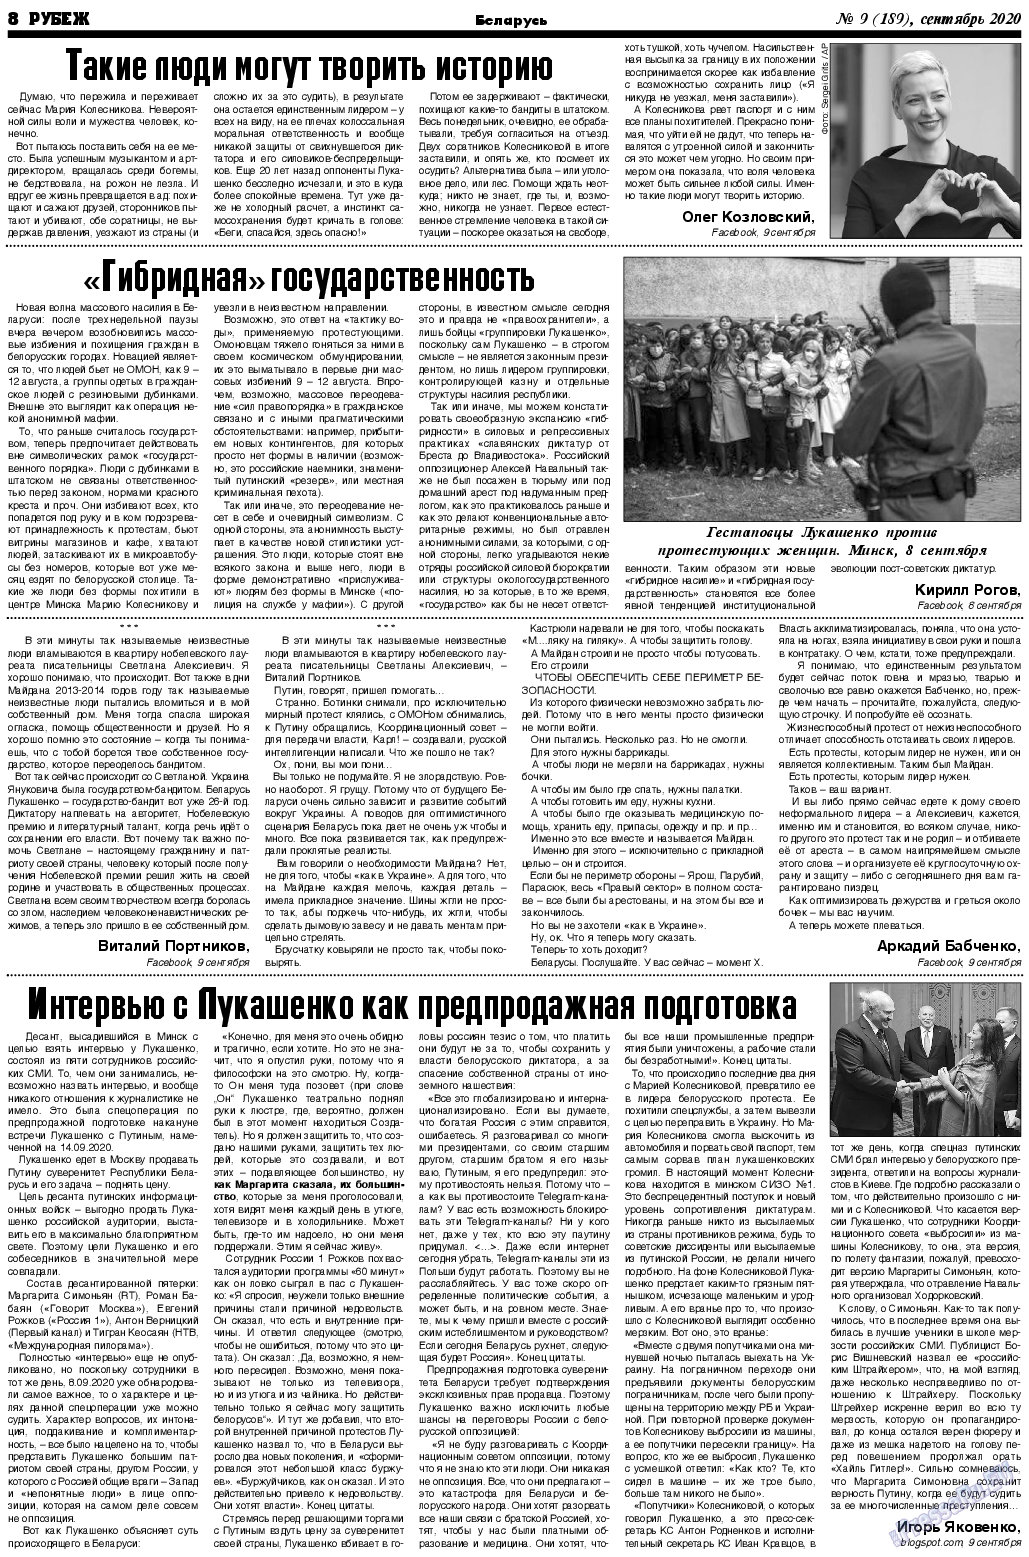 Рубеж, газета. 2020 №9 стр.8